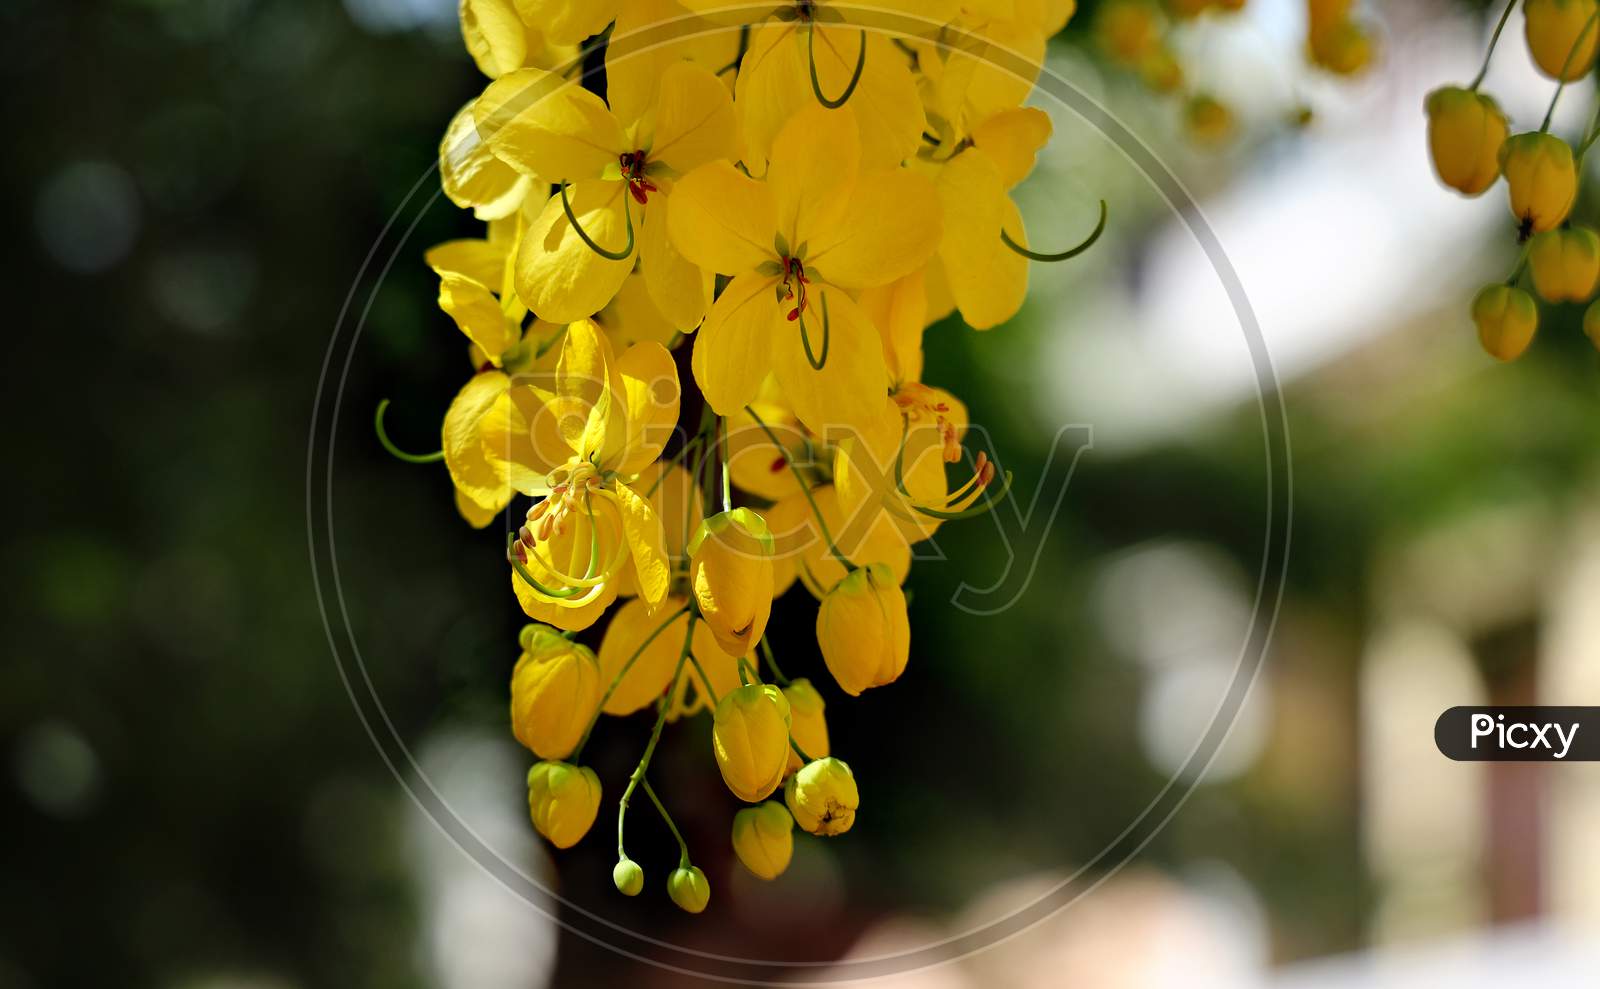 Yellow Flowers of a cassia fistula tree